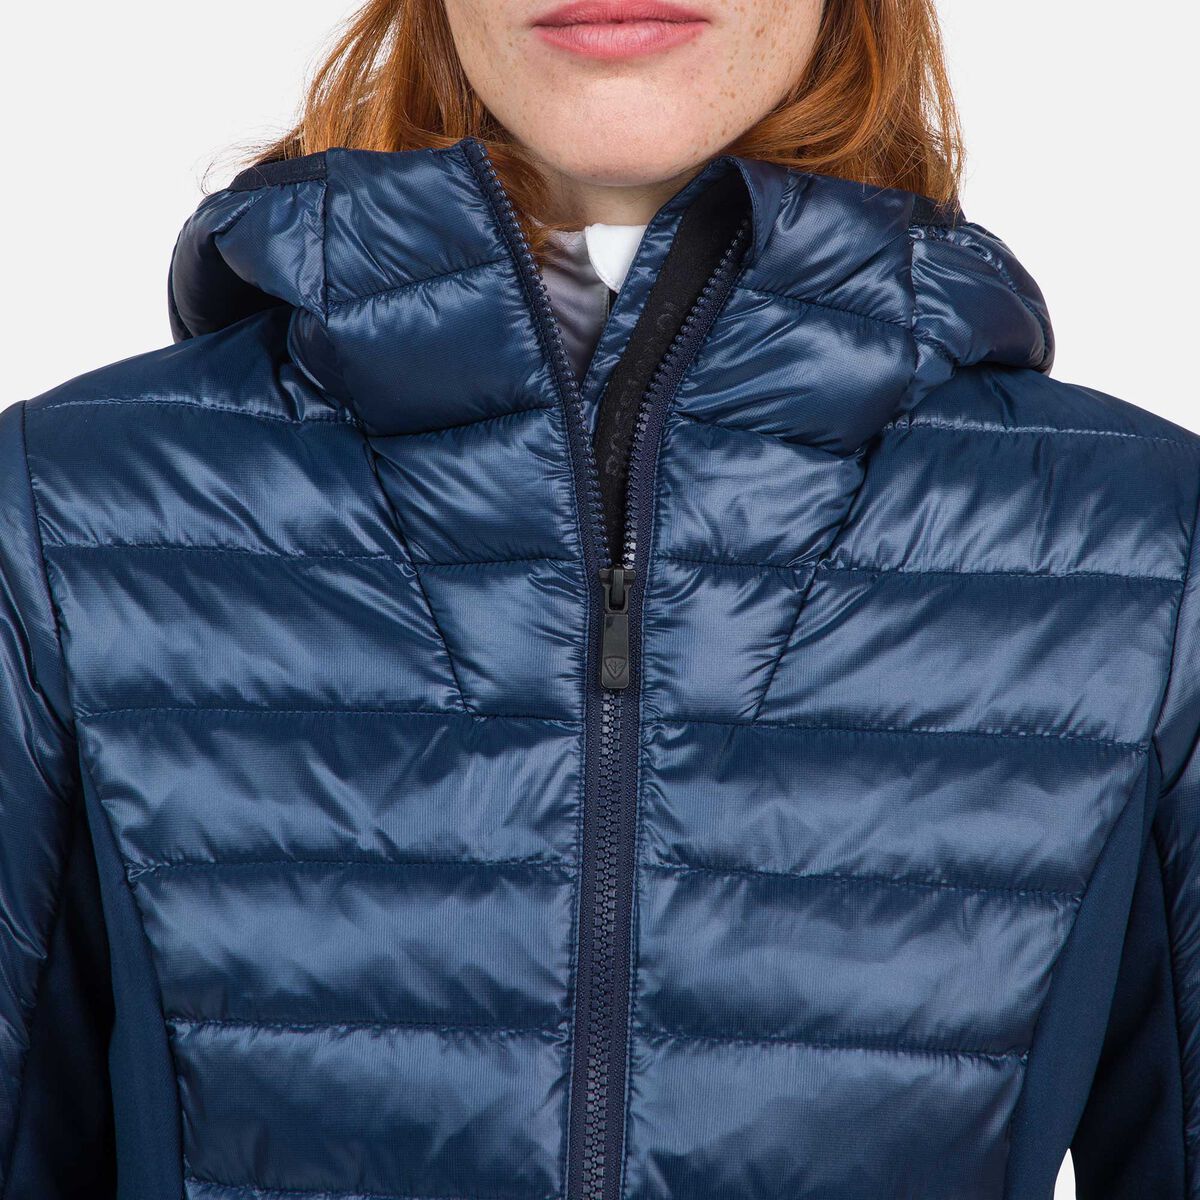 Rossignol Women's SKPR Hybrid Light Jacket blue